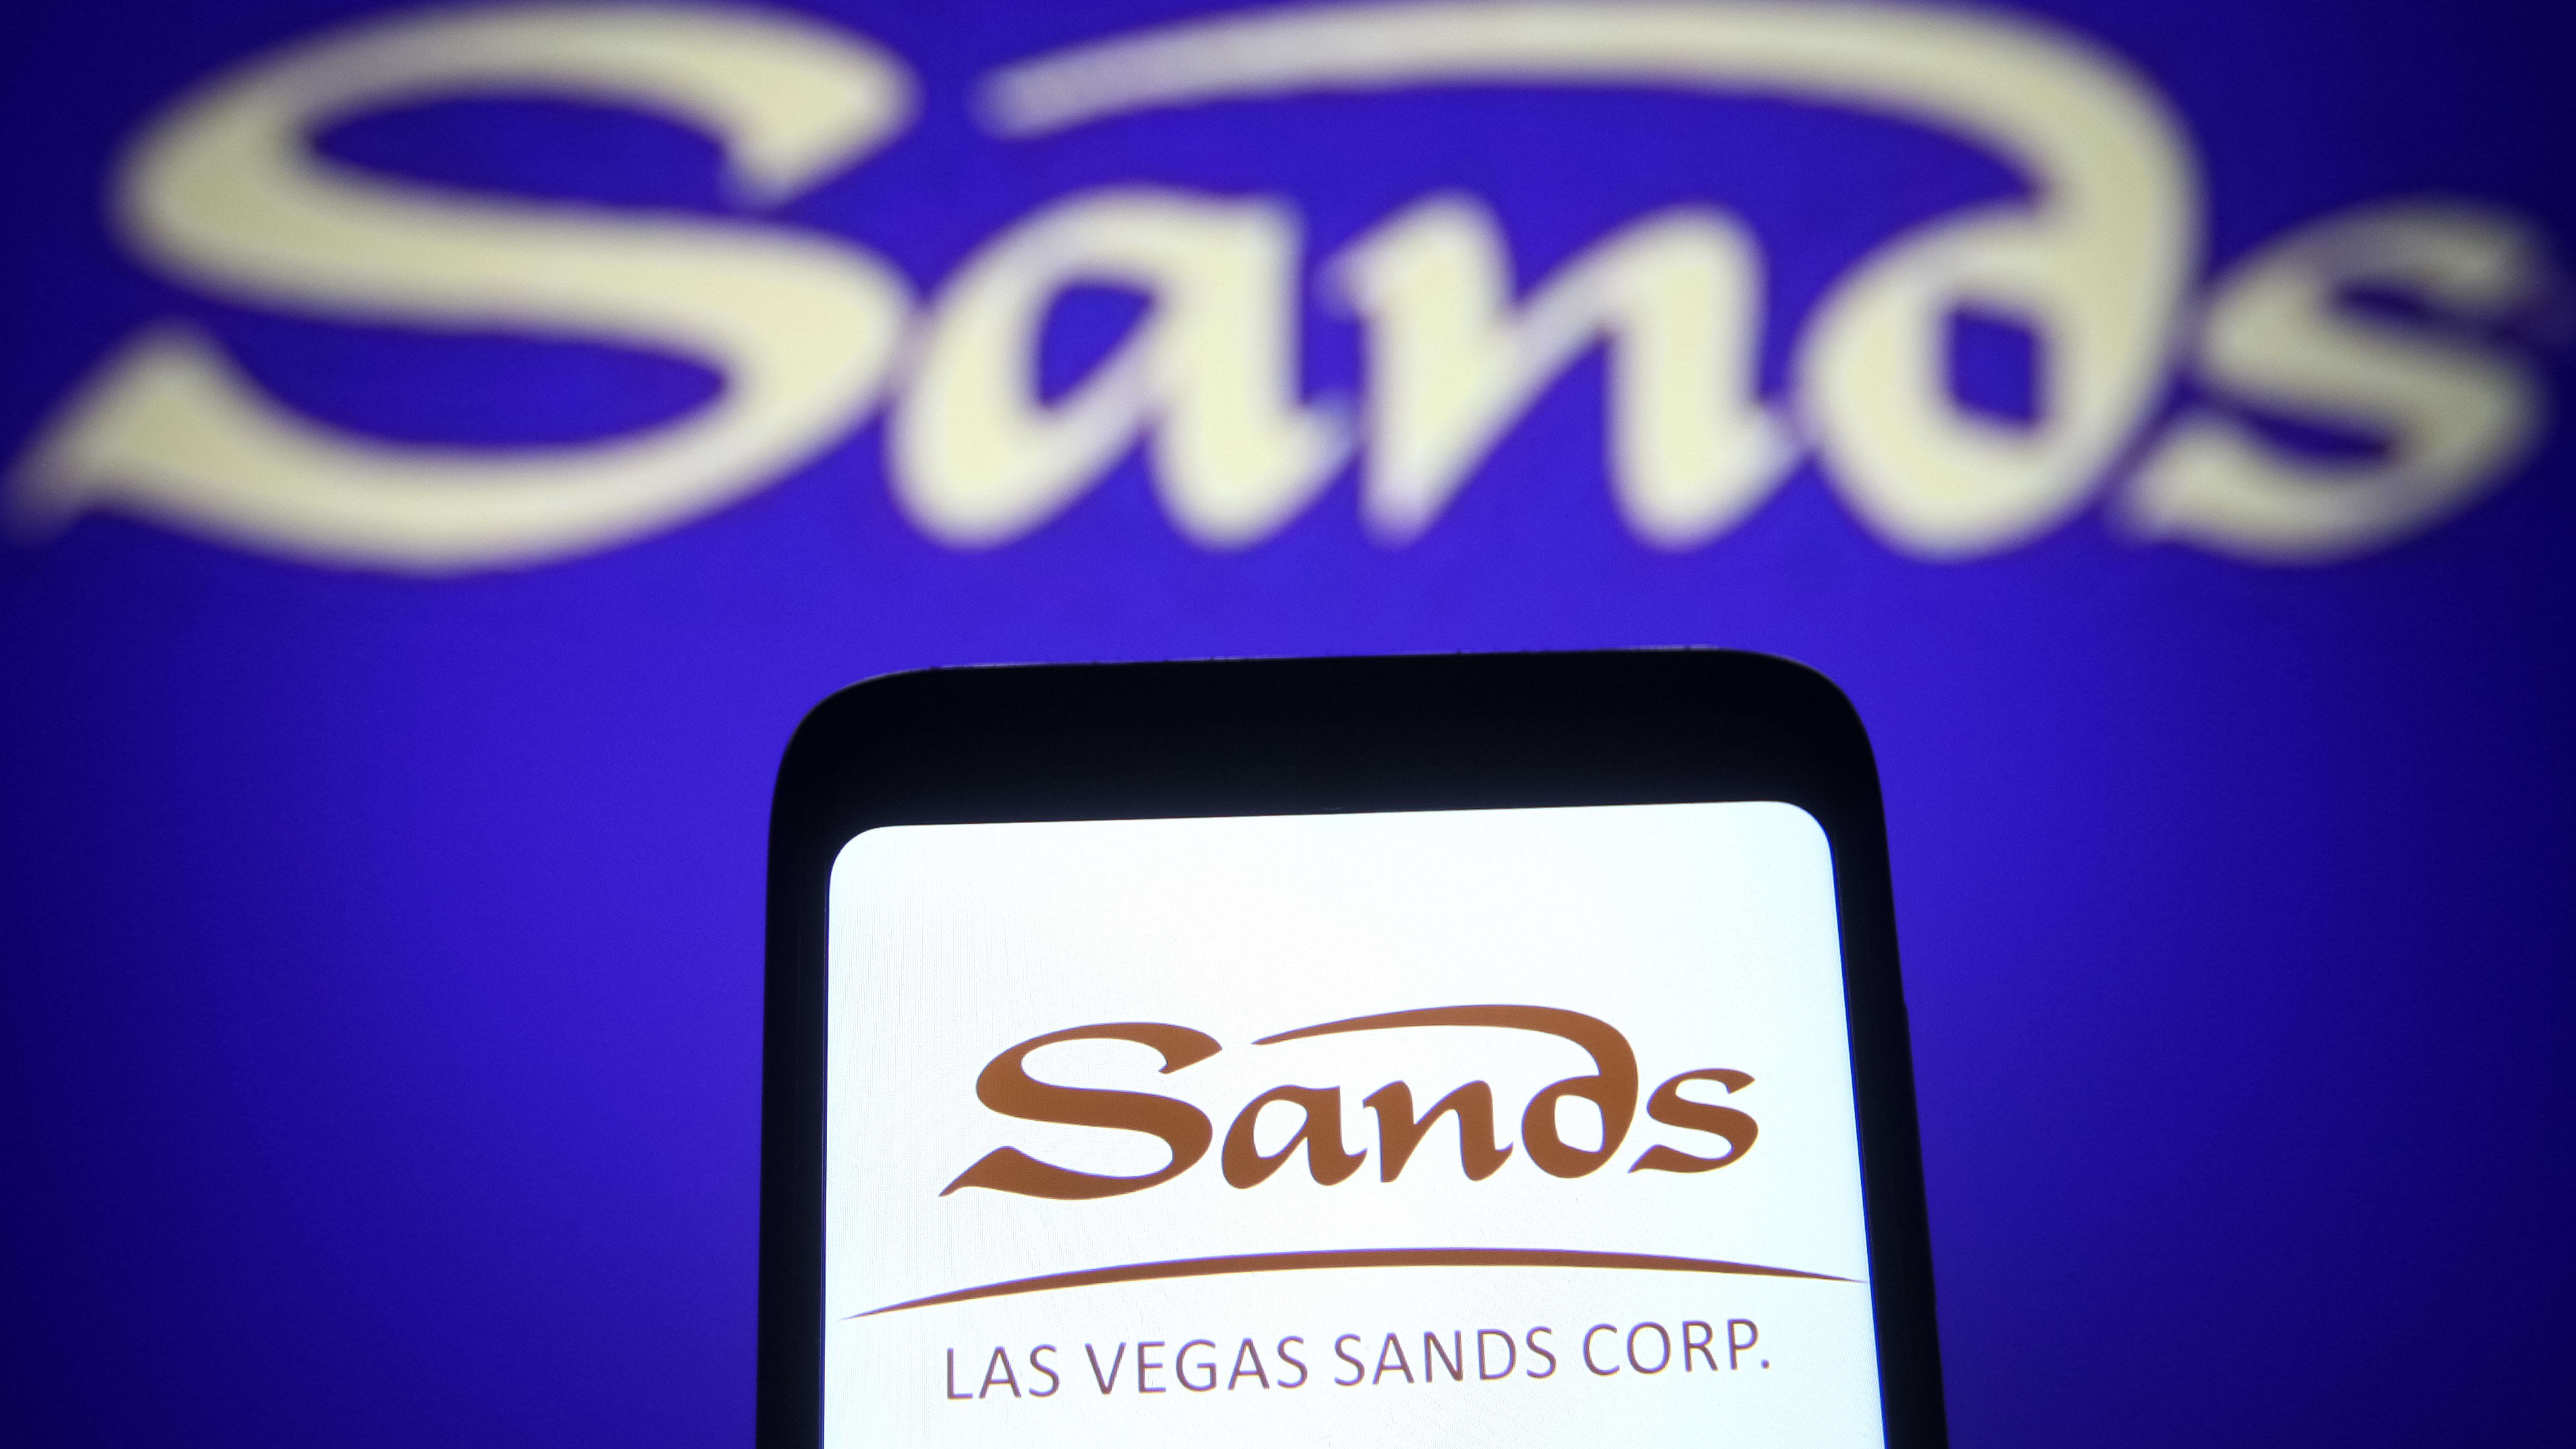 Las Vegas Sands, Zions Bancorp, Equifax: Trending Stocks